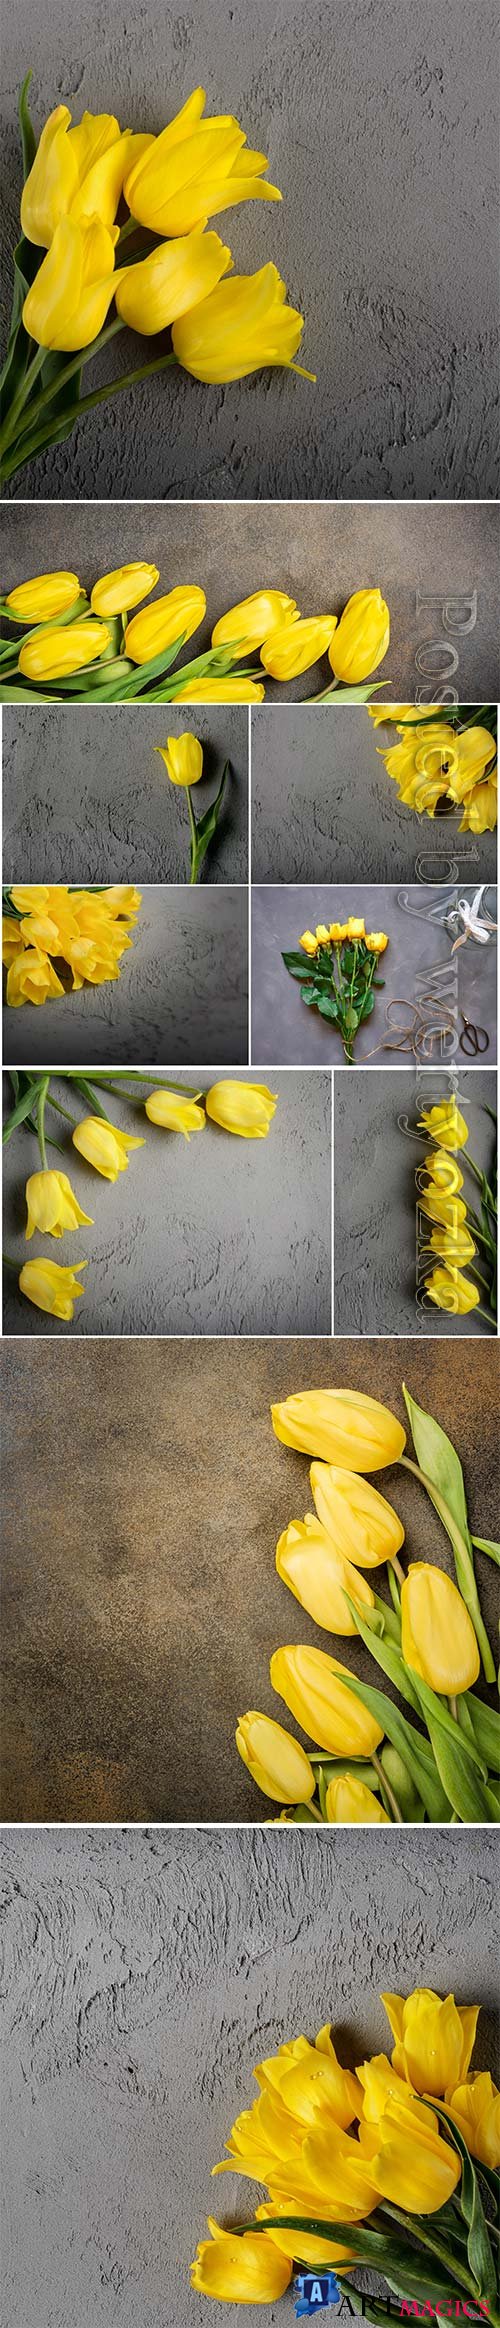 Beautiful yellow tulips stock photo